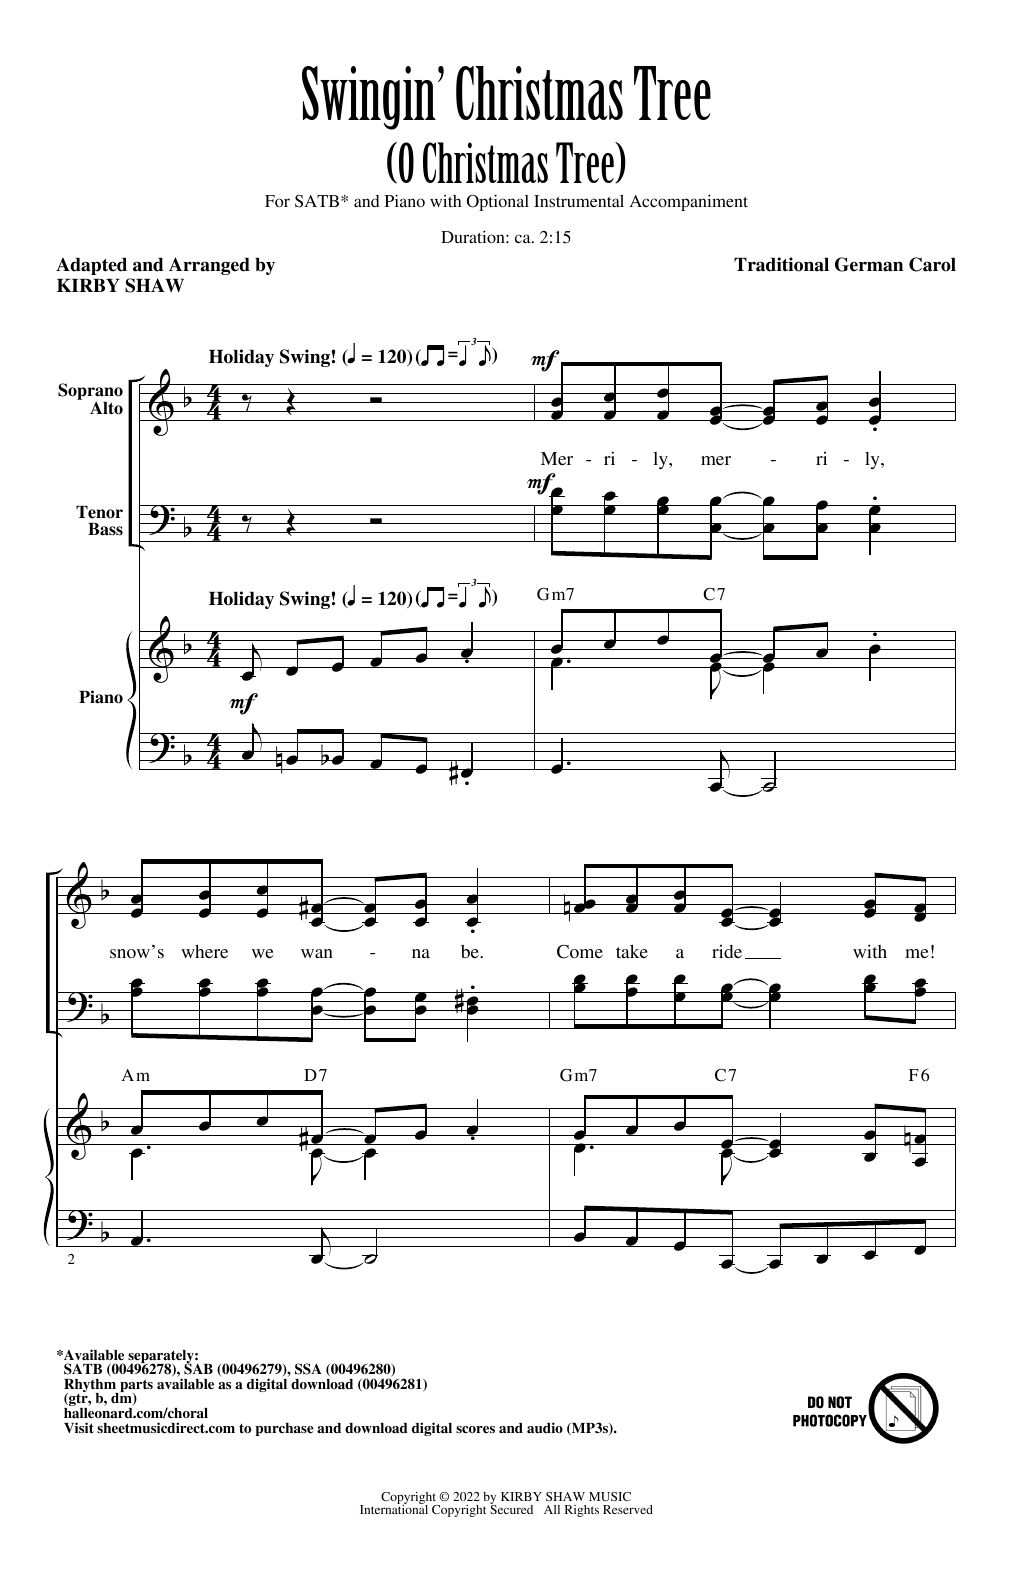 Traditional German Carol Swingin' Christmas Tree (O Christmas Tree) (arr. Kirby Shaw) sheet music notes and chords arranged for SATB Choir